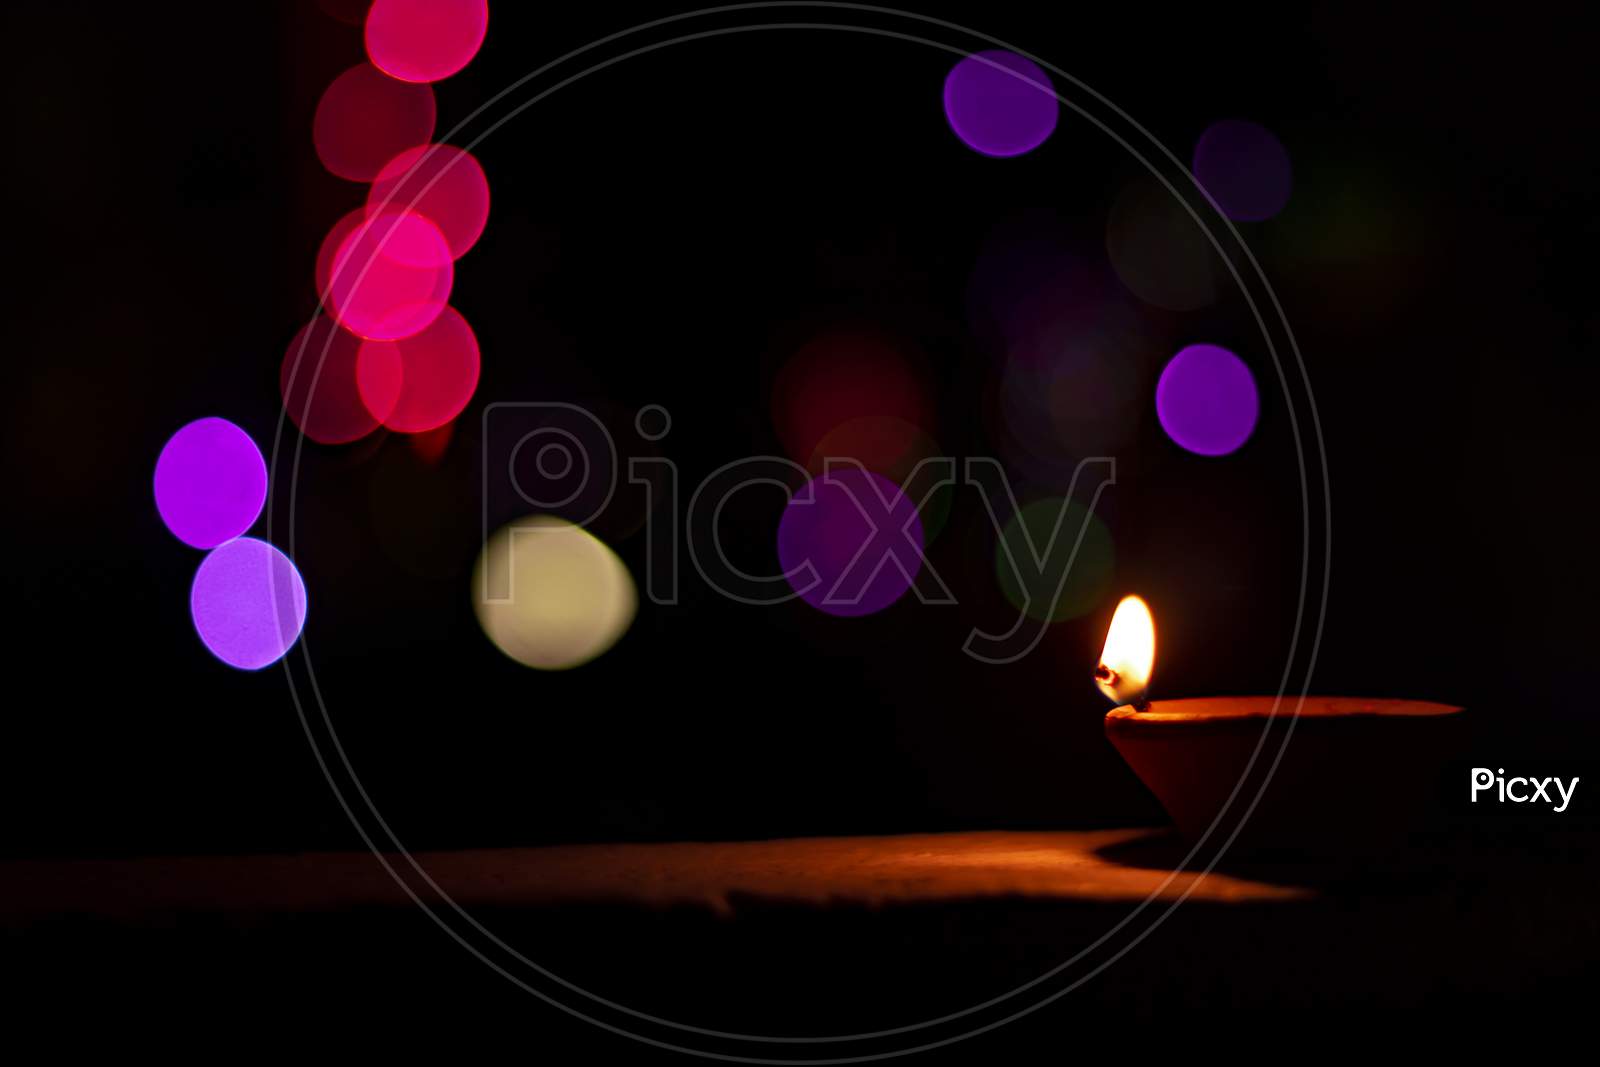 Happy Diwali - Clay Diya Lamps Lit During Diwali Celebration